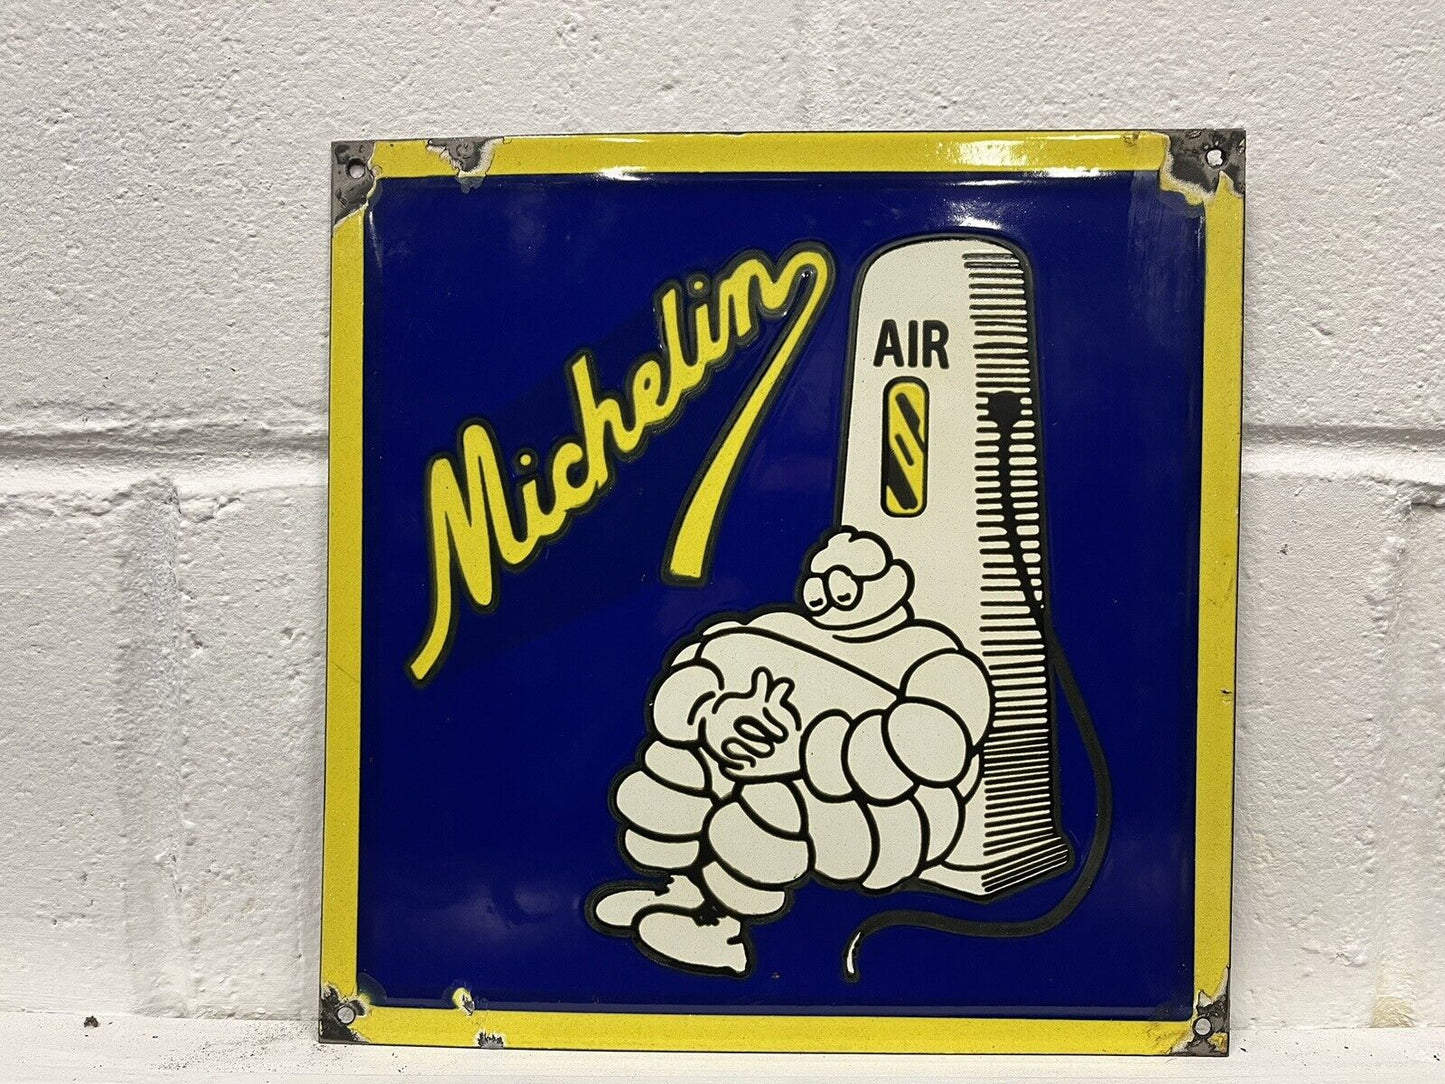 Michelin Garage Advertising Enamel Sign.